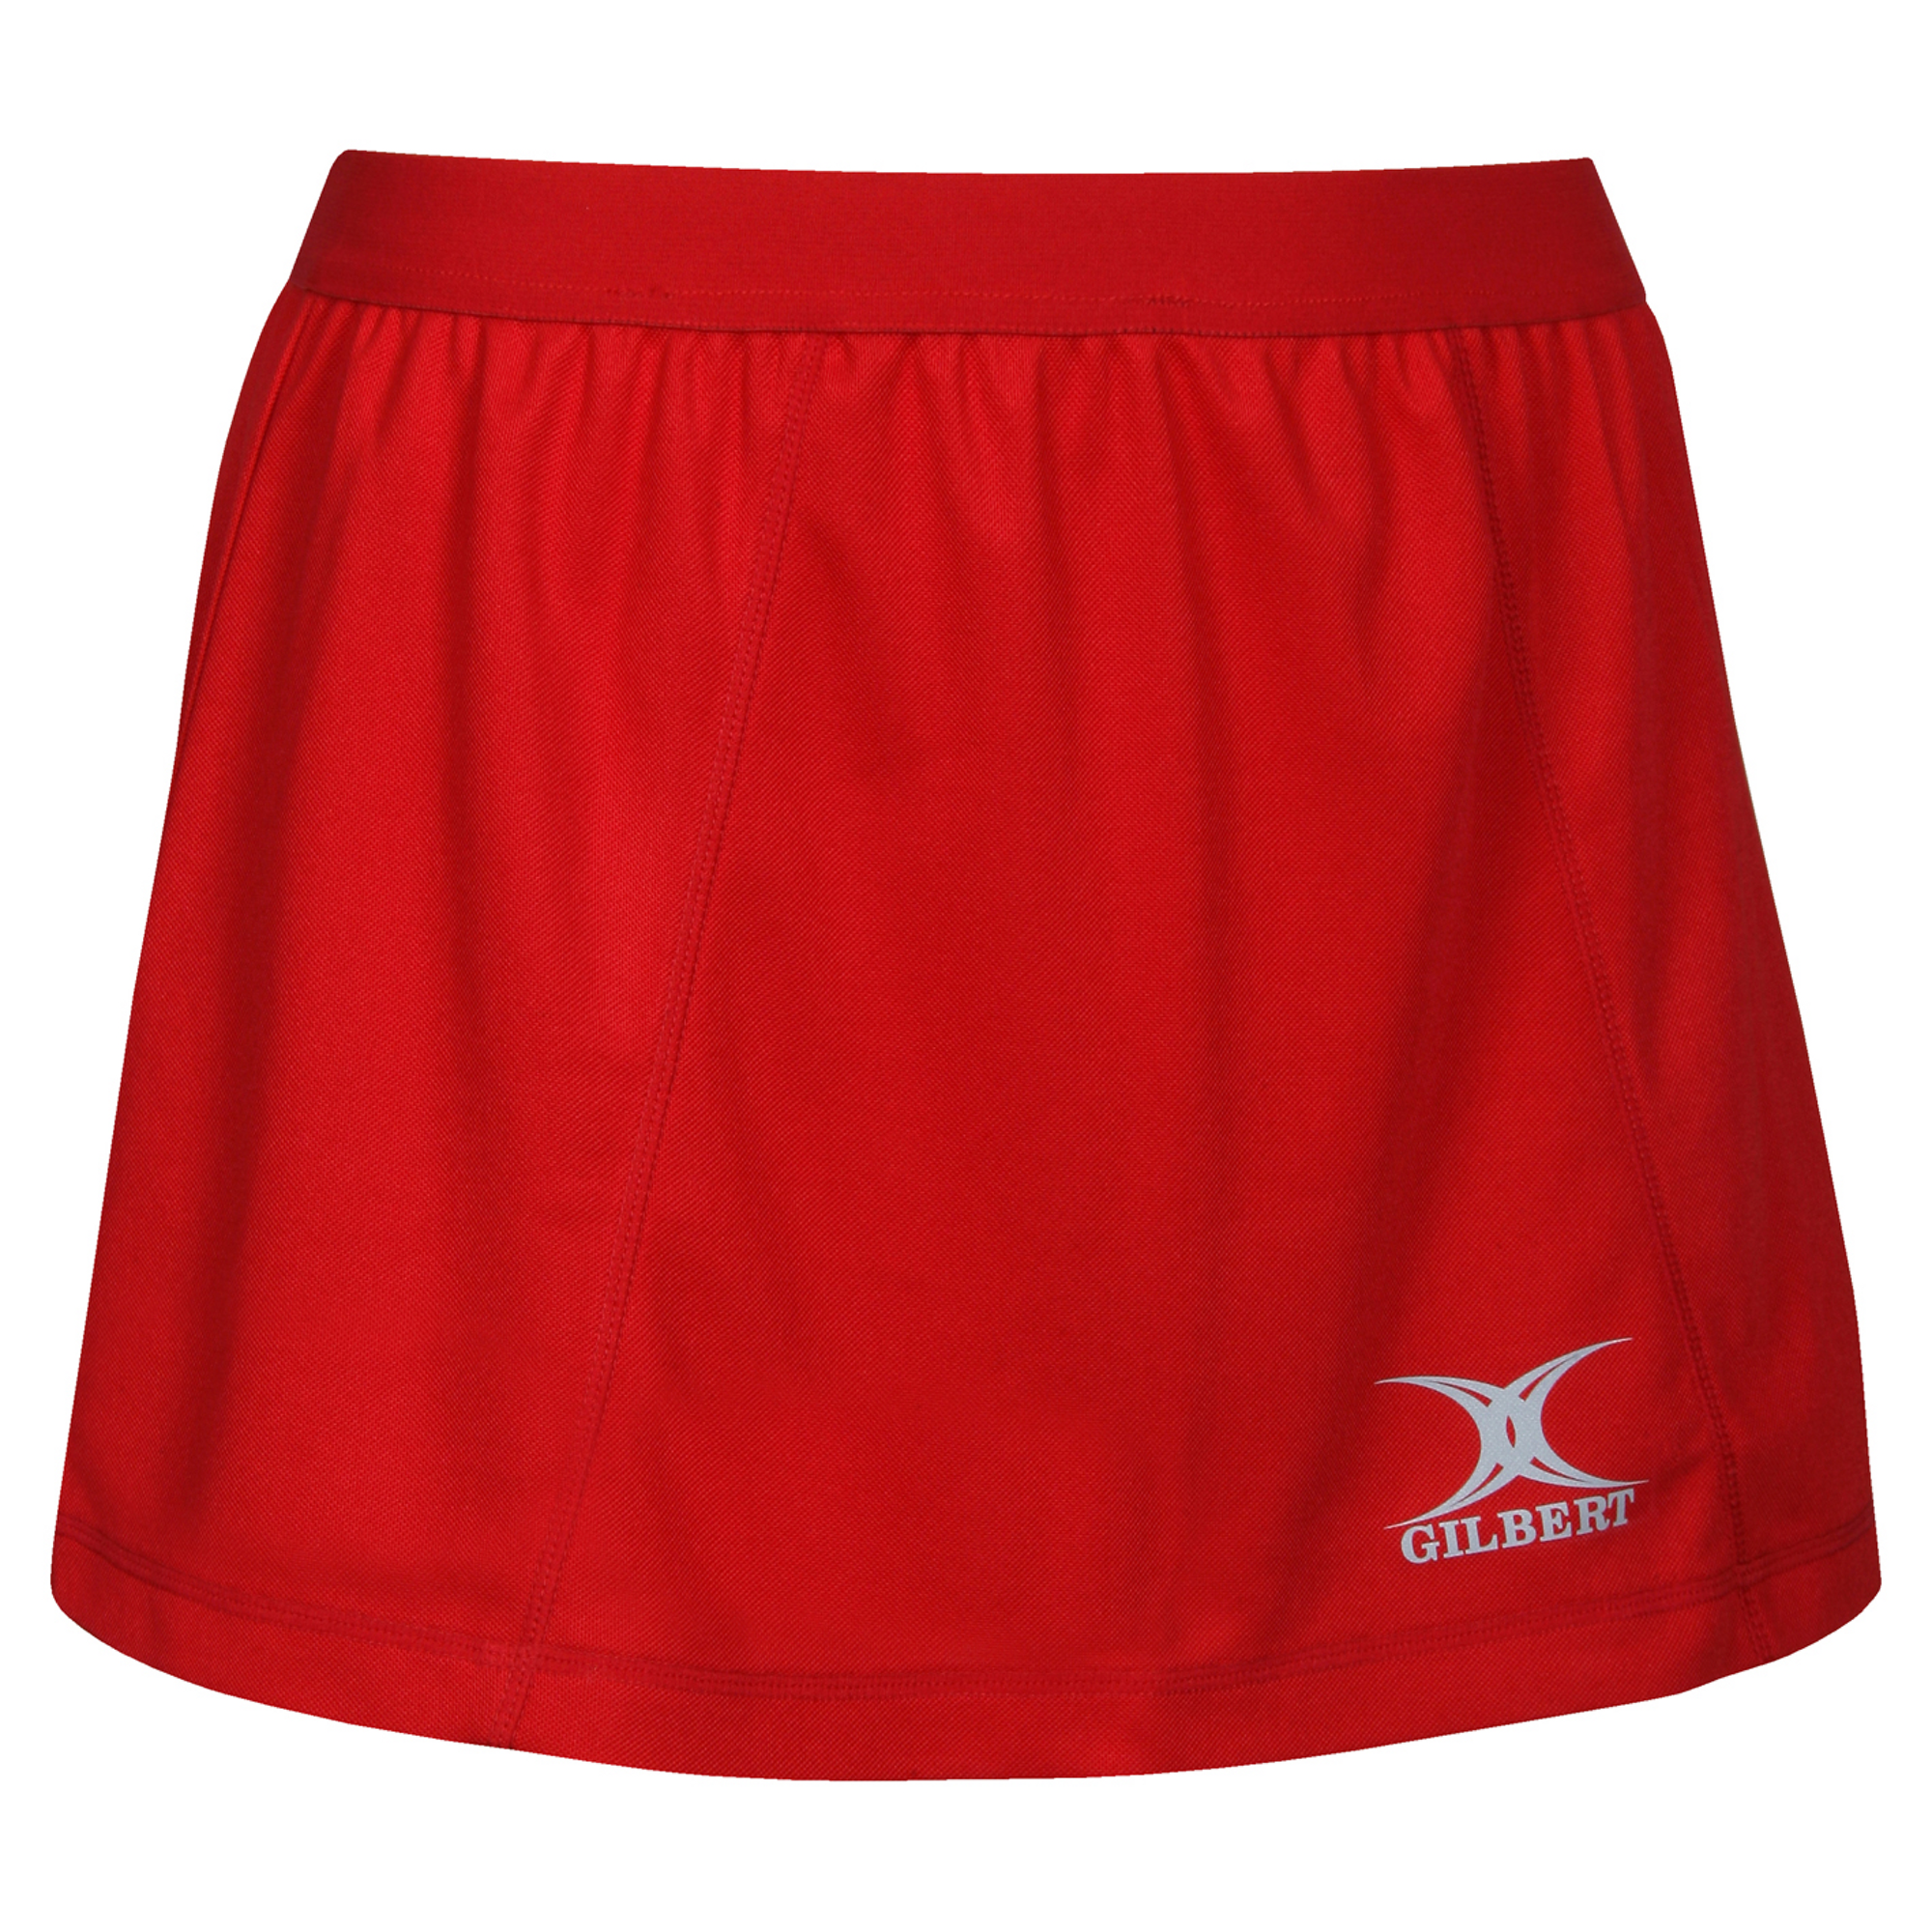 Gilbert Blaze Netball Skirt 14 Red